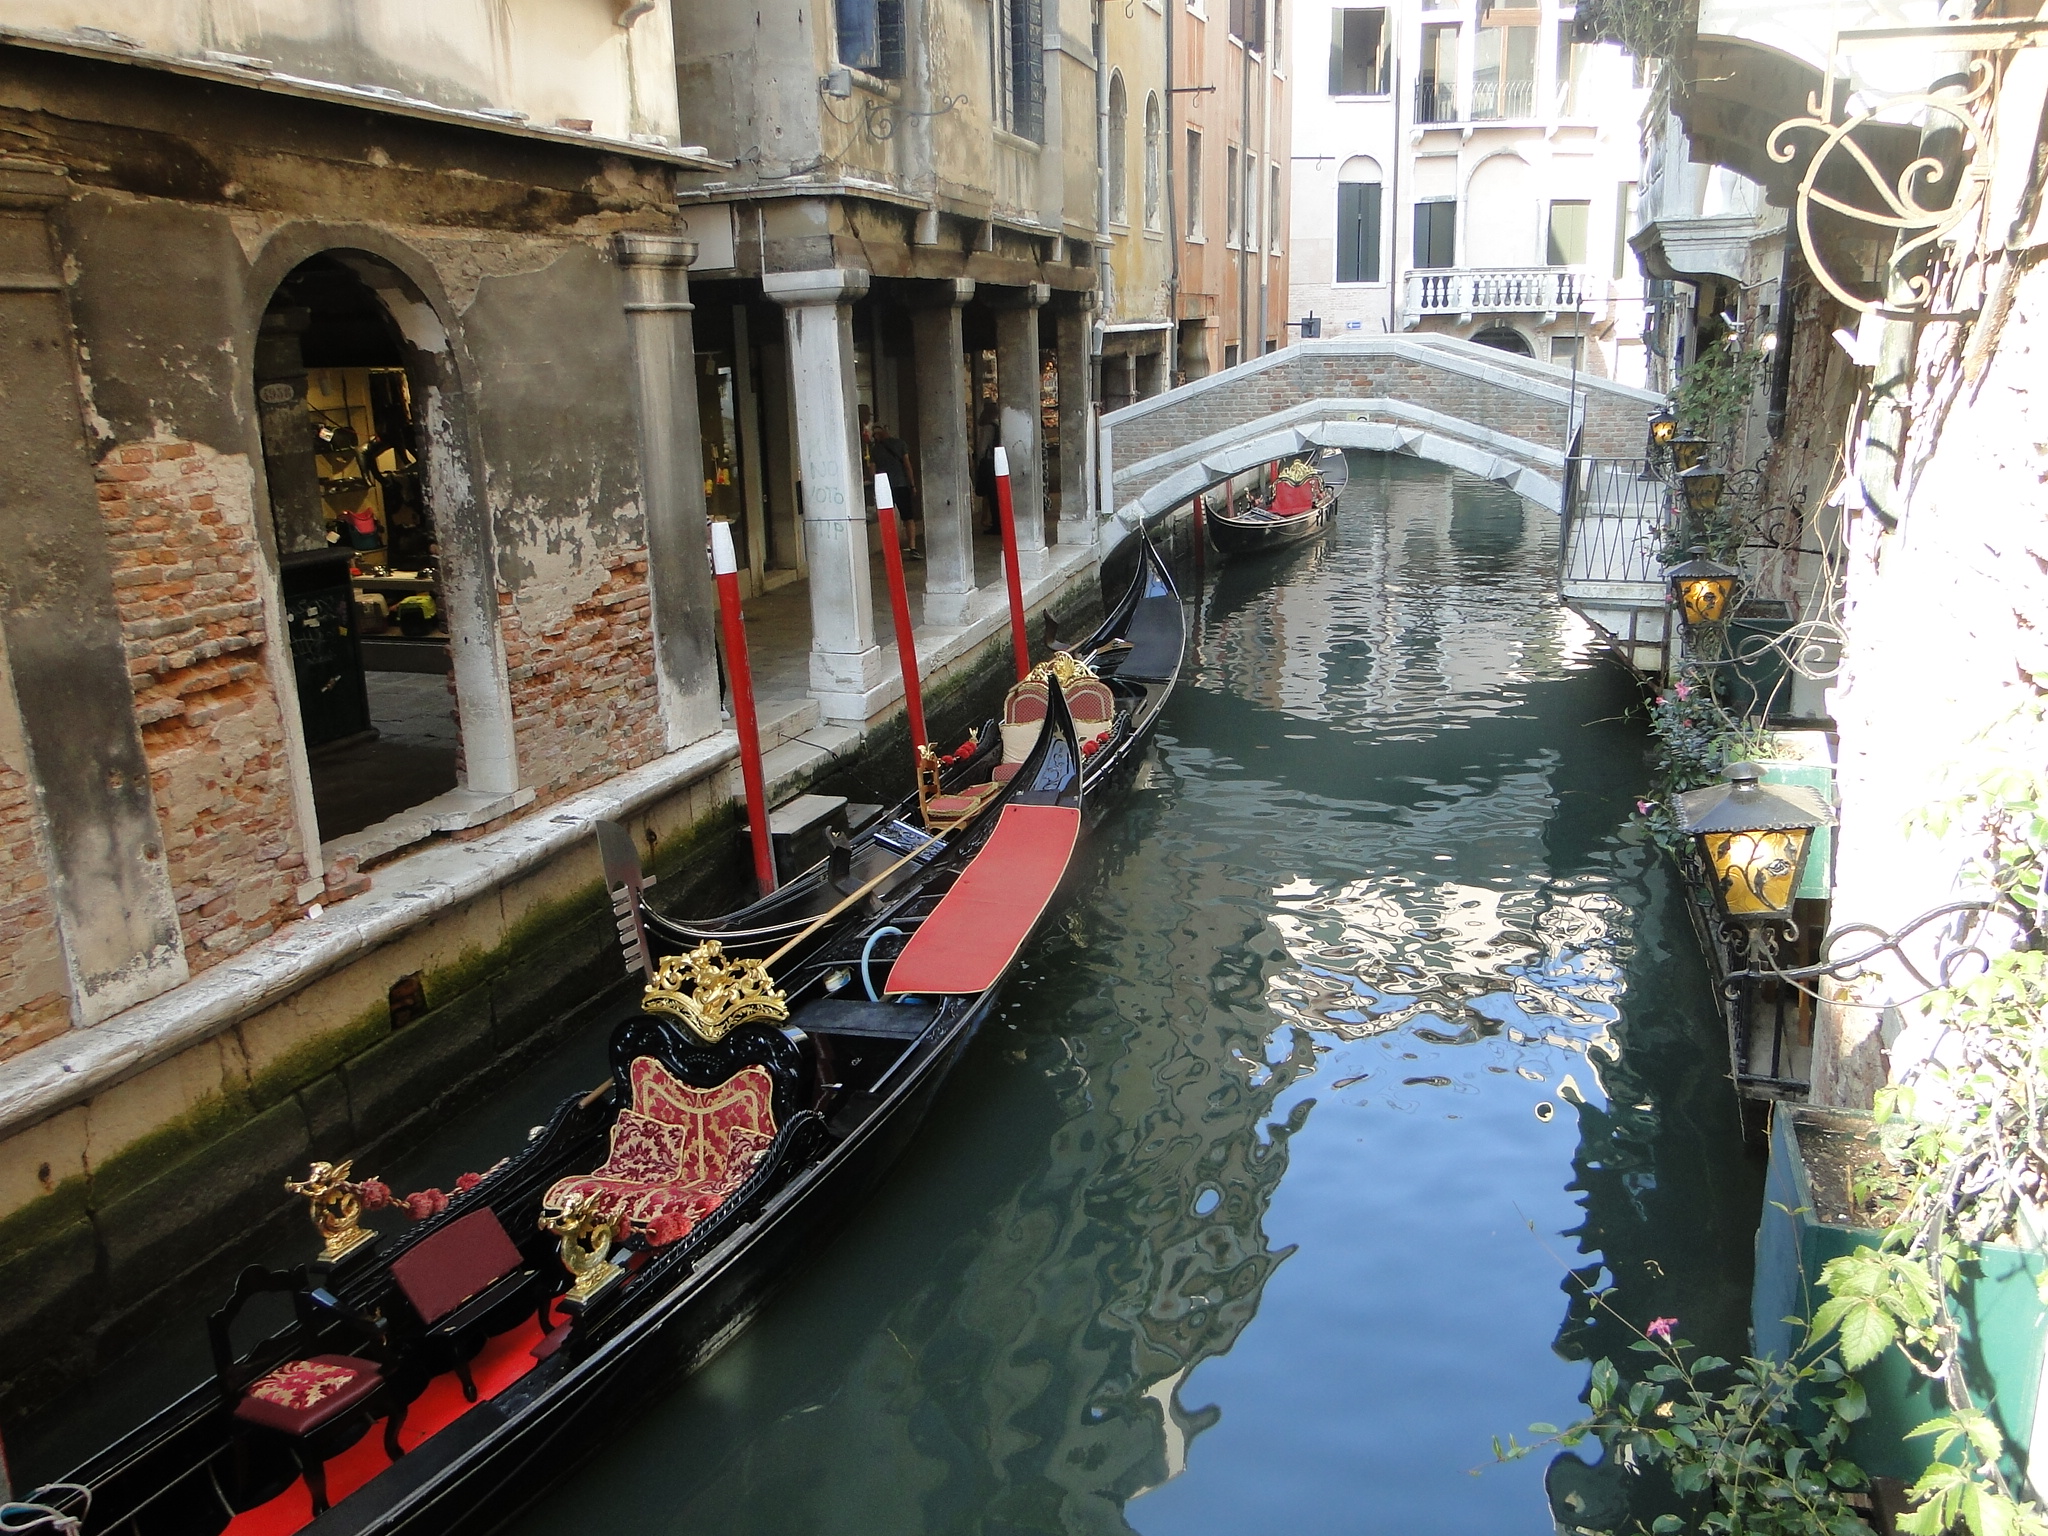 Gondola in Venice's canals